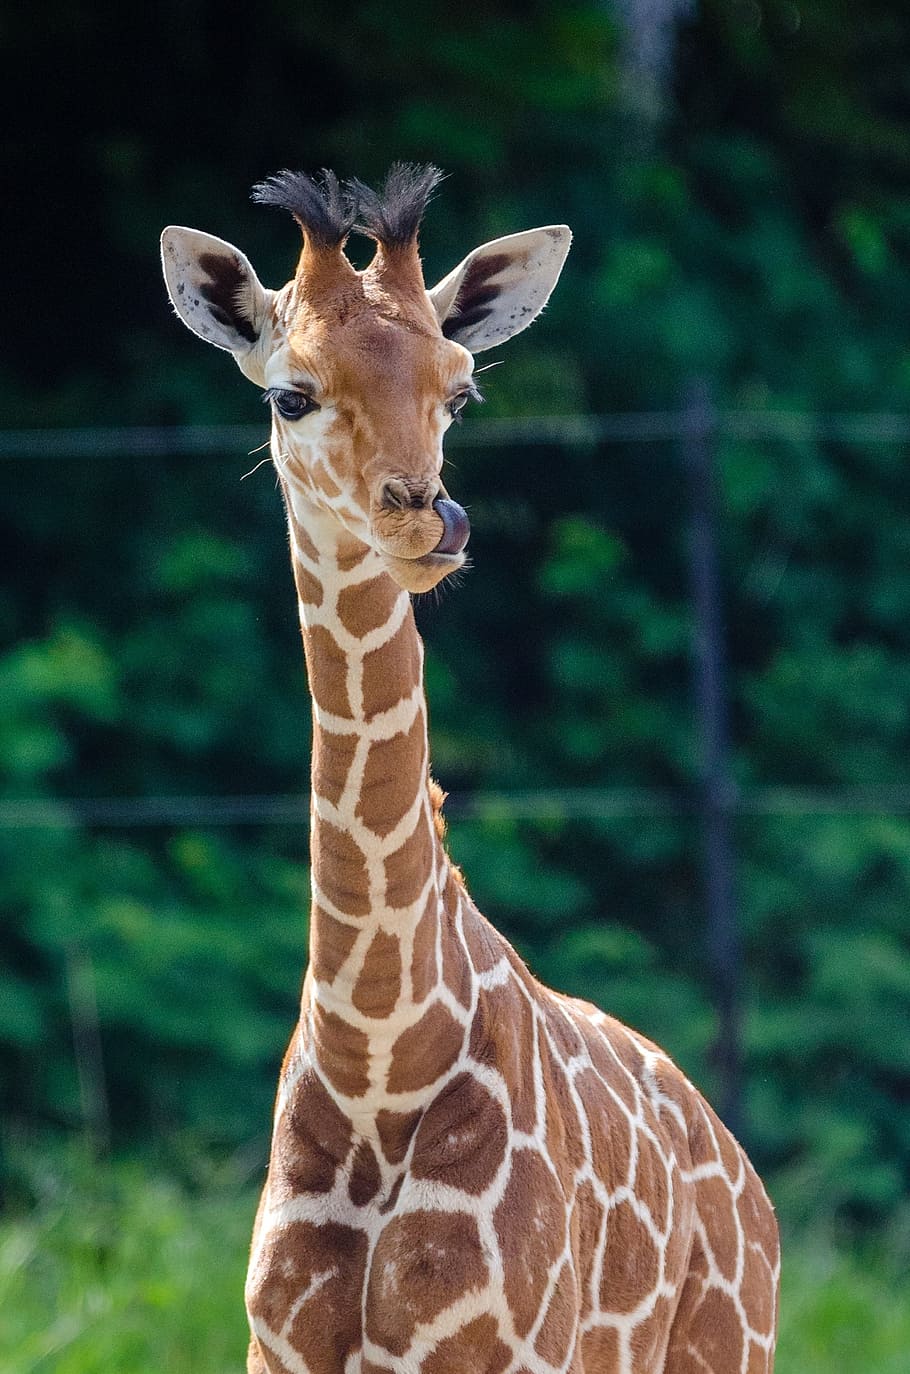 foto de jirafa, jirafa bebé, joven, animal, mamífero, más alto, vida silvestre, zoológico, marrón, manchas